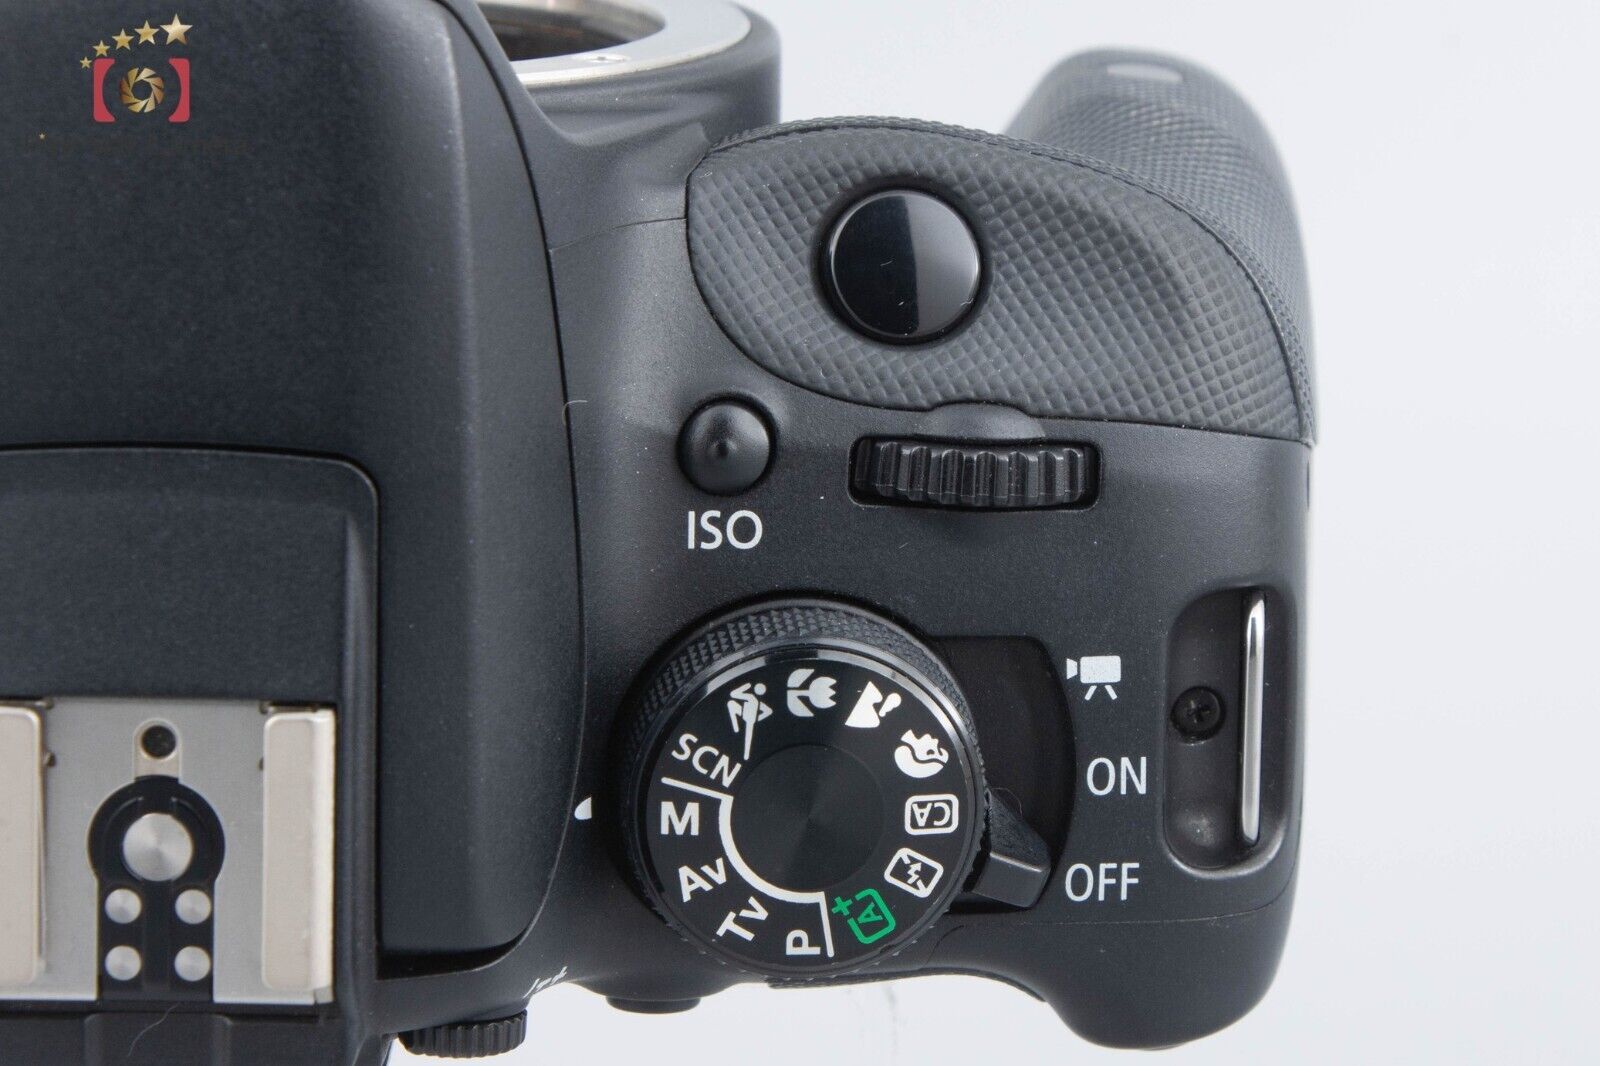 Canon EOS Kiss X7 / Rebel SL1 / 100D 18.0 MP DSLR EF-S 18-55 55-250 Lens kit